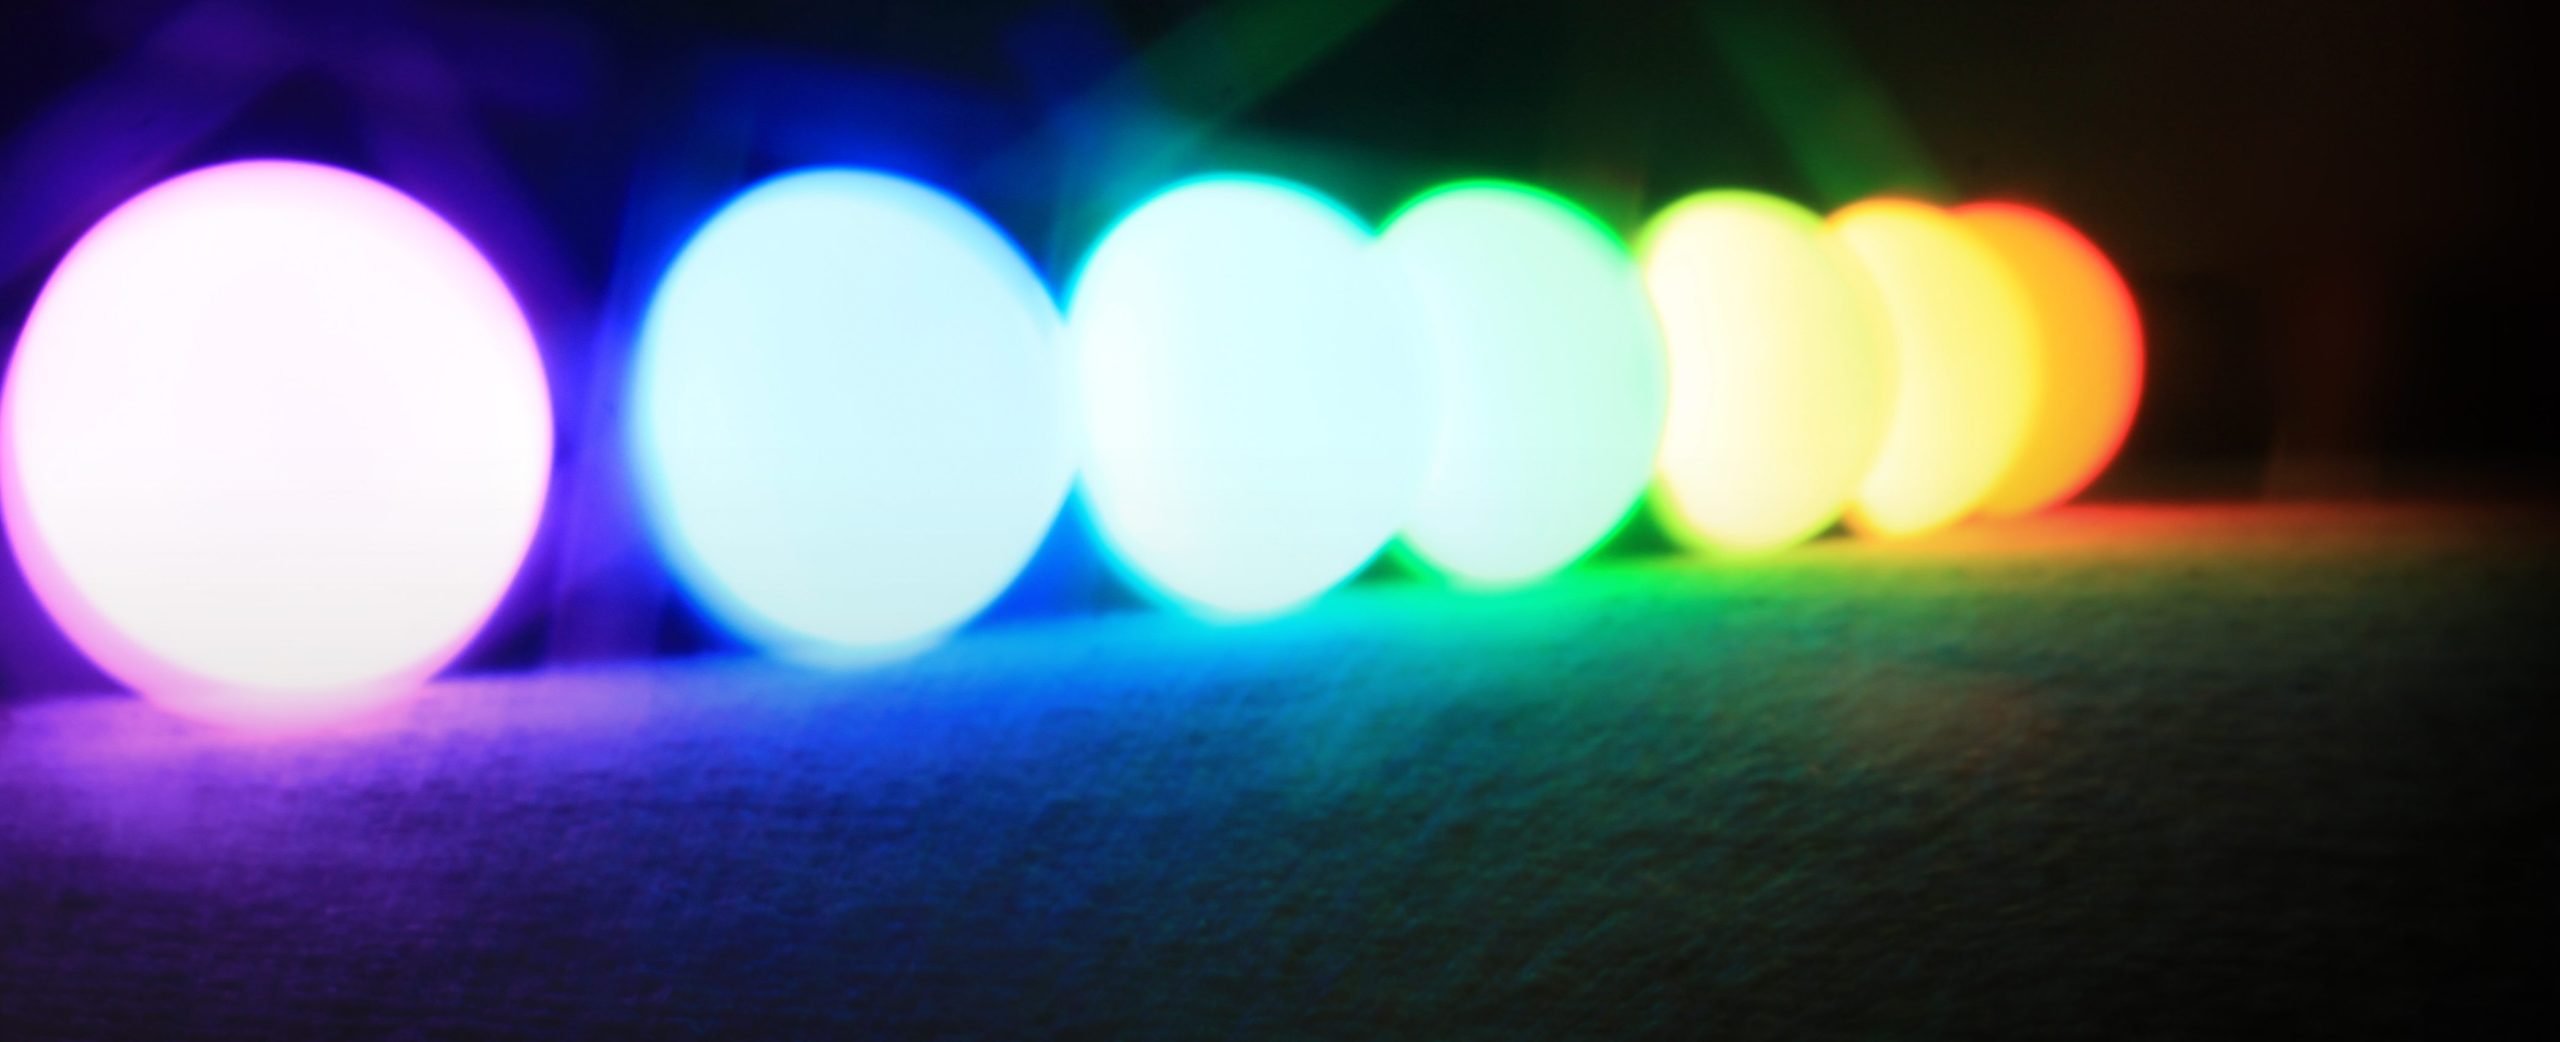 Lumen TL800 and LuMini TL100 App-Enabled LED Color Mood Light Bulbs Review